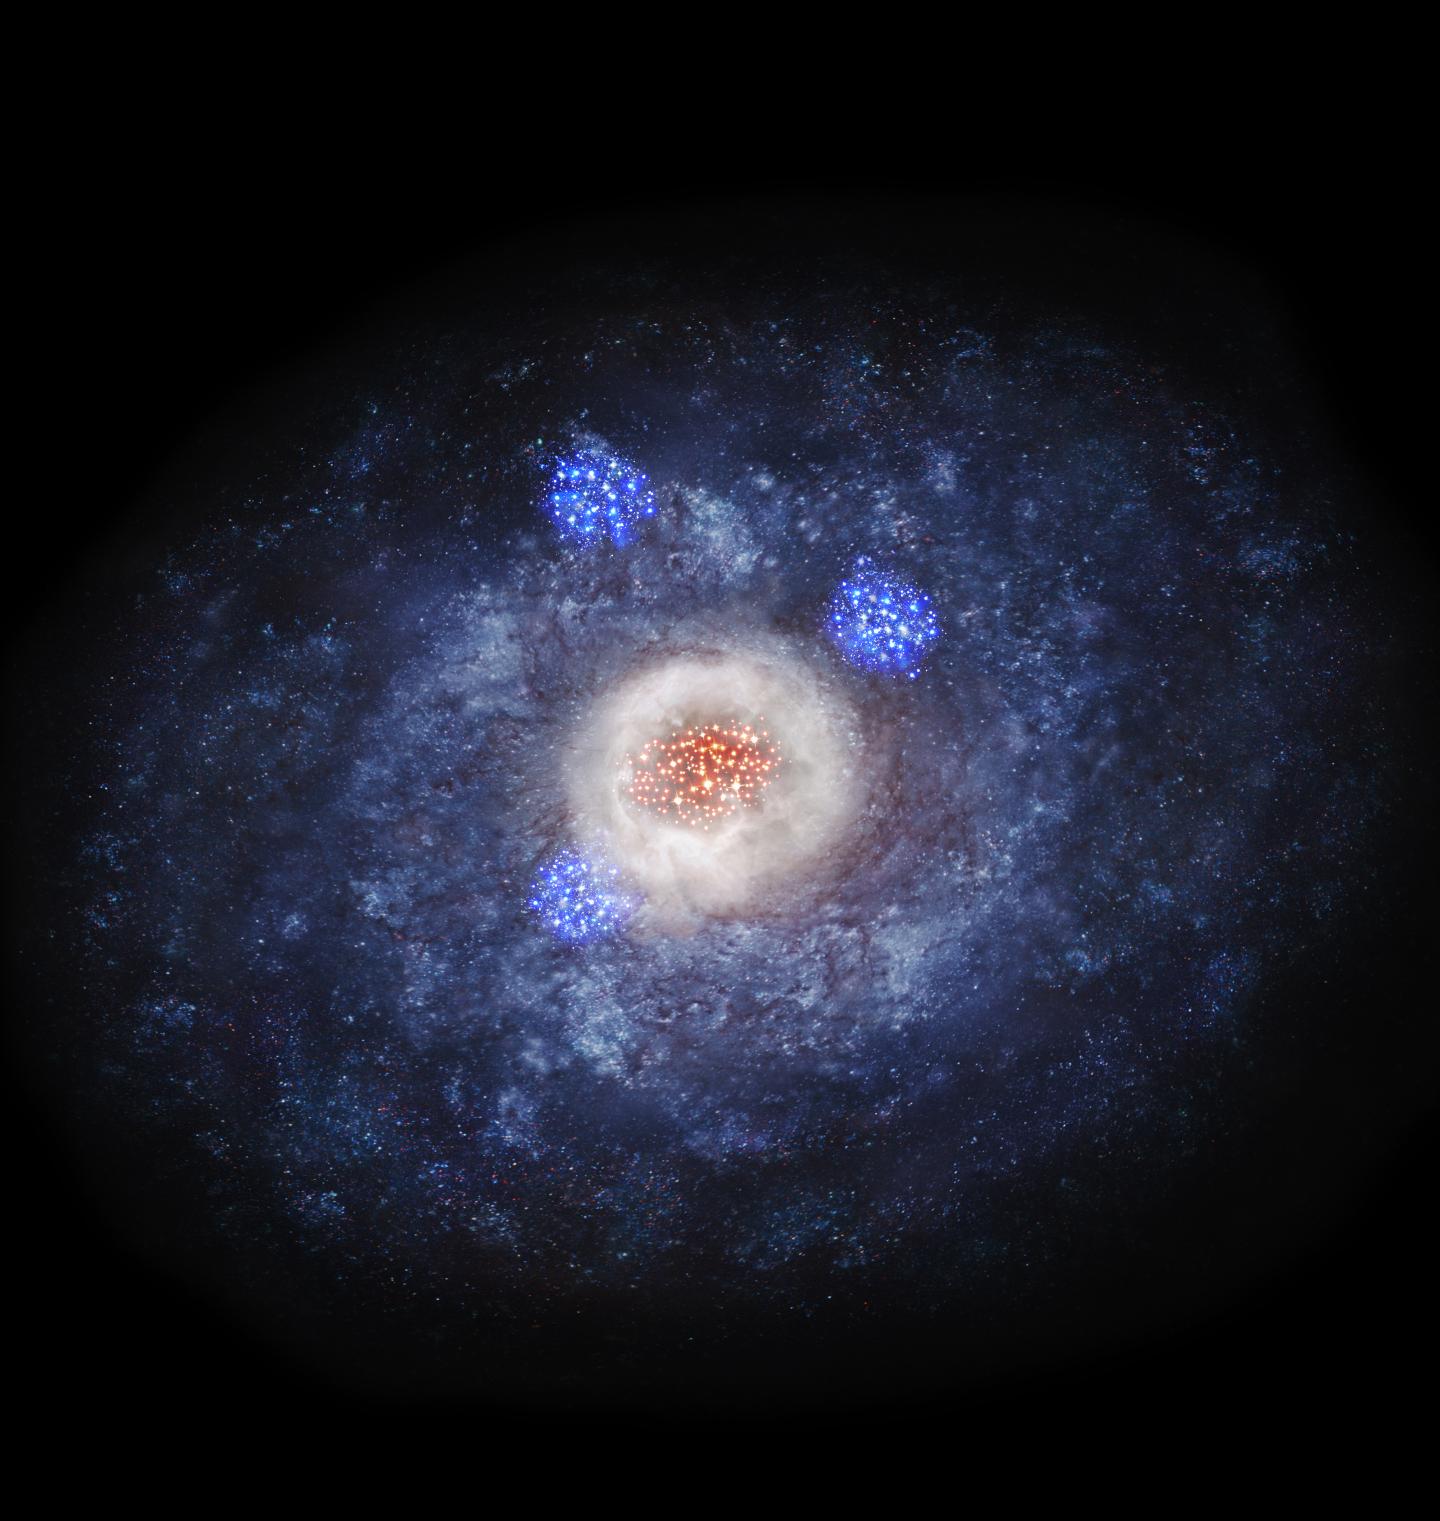 Artist's Impression of a Disk Galaxy Transforming in to An Elliptical Galaxy